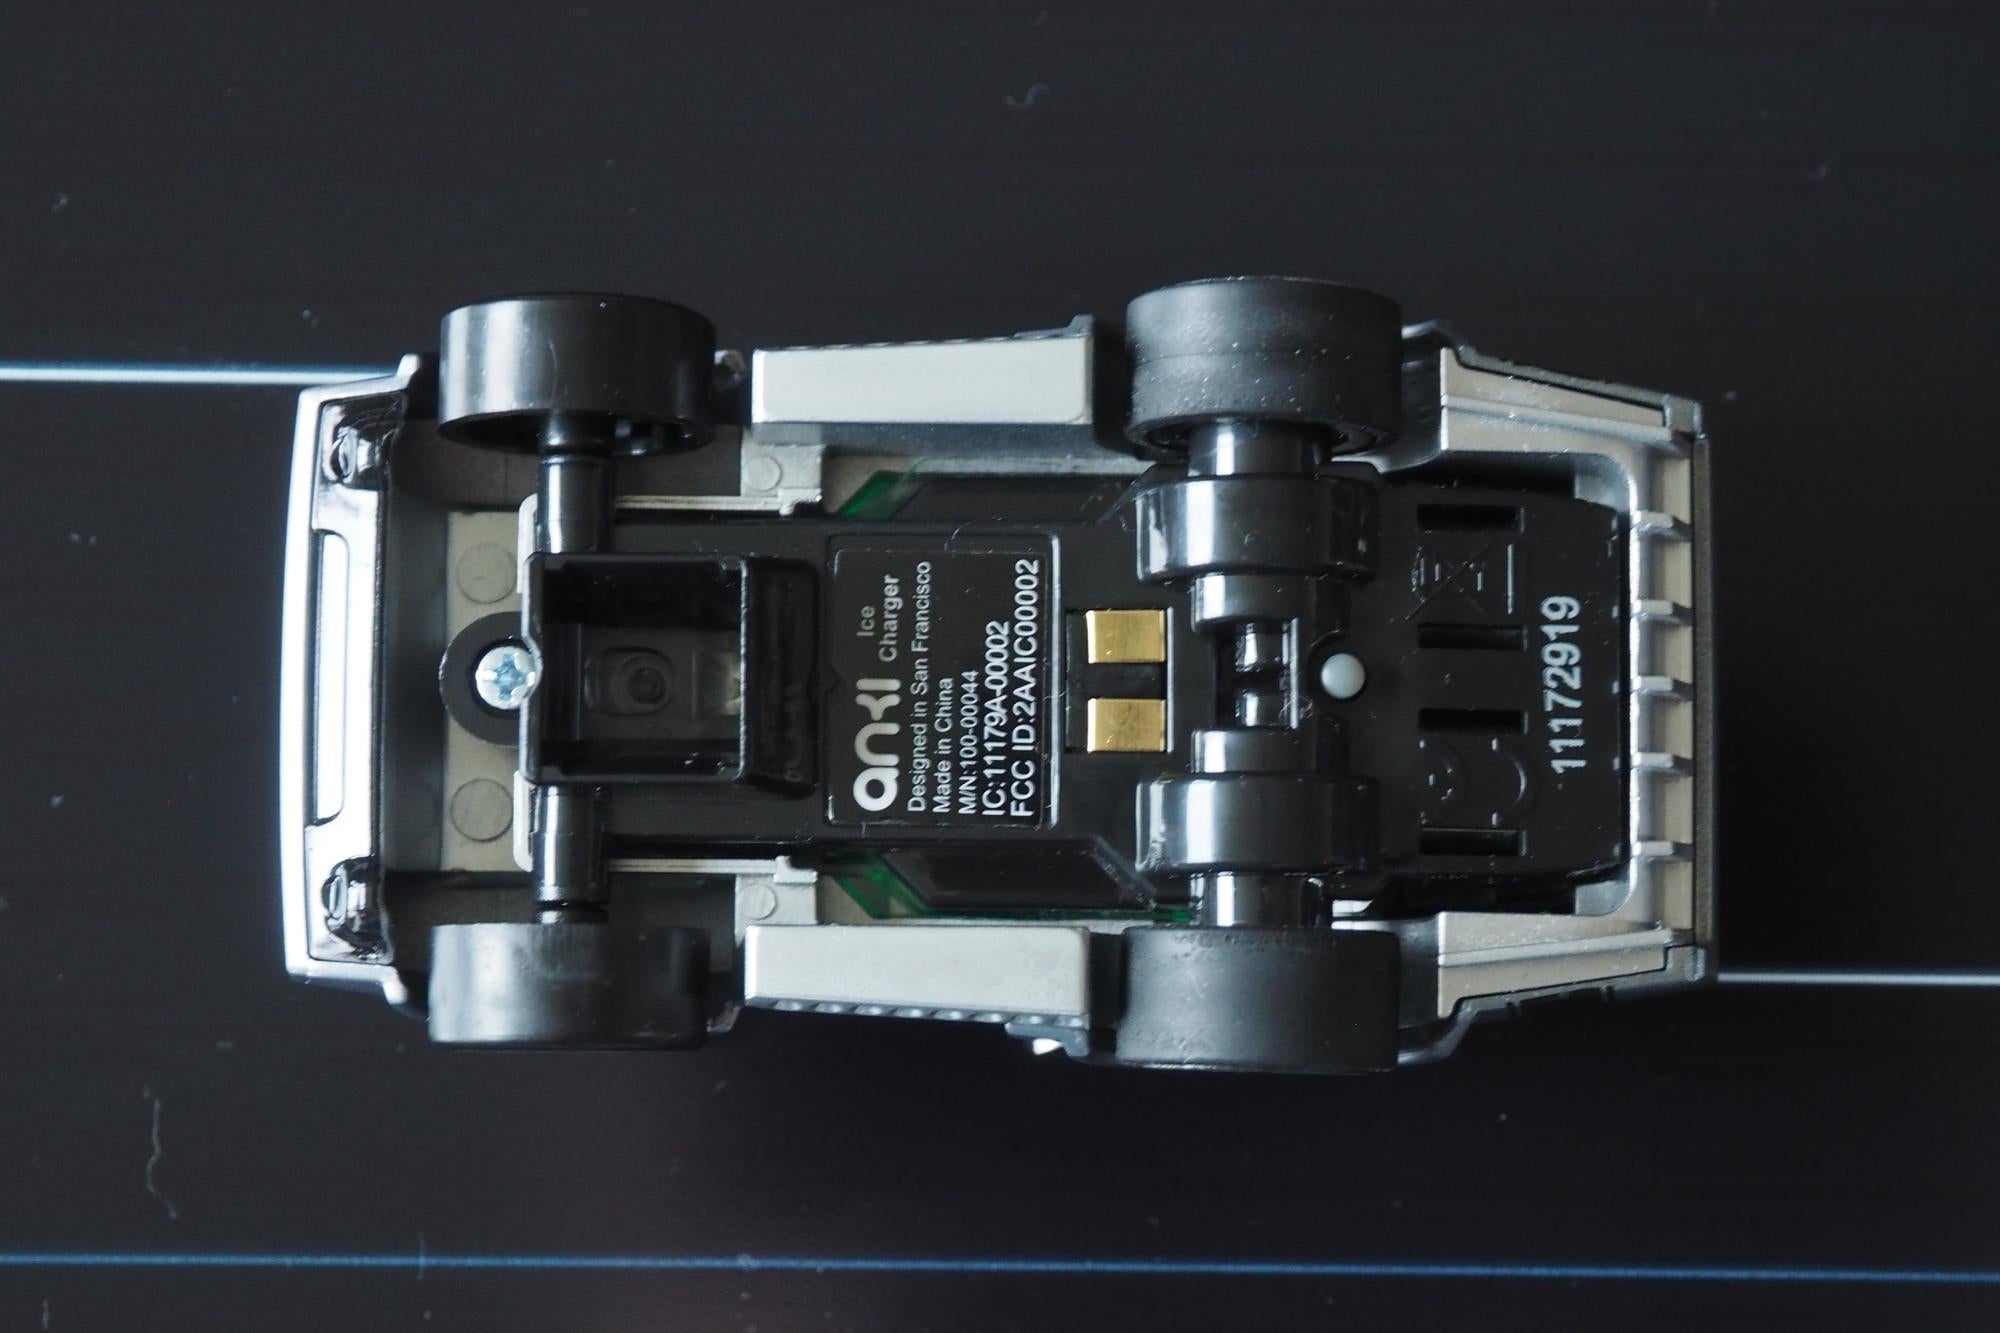 Anki Overdrive car underside showing wheels and optical sensor.